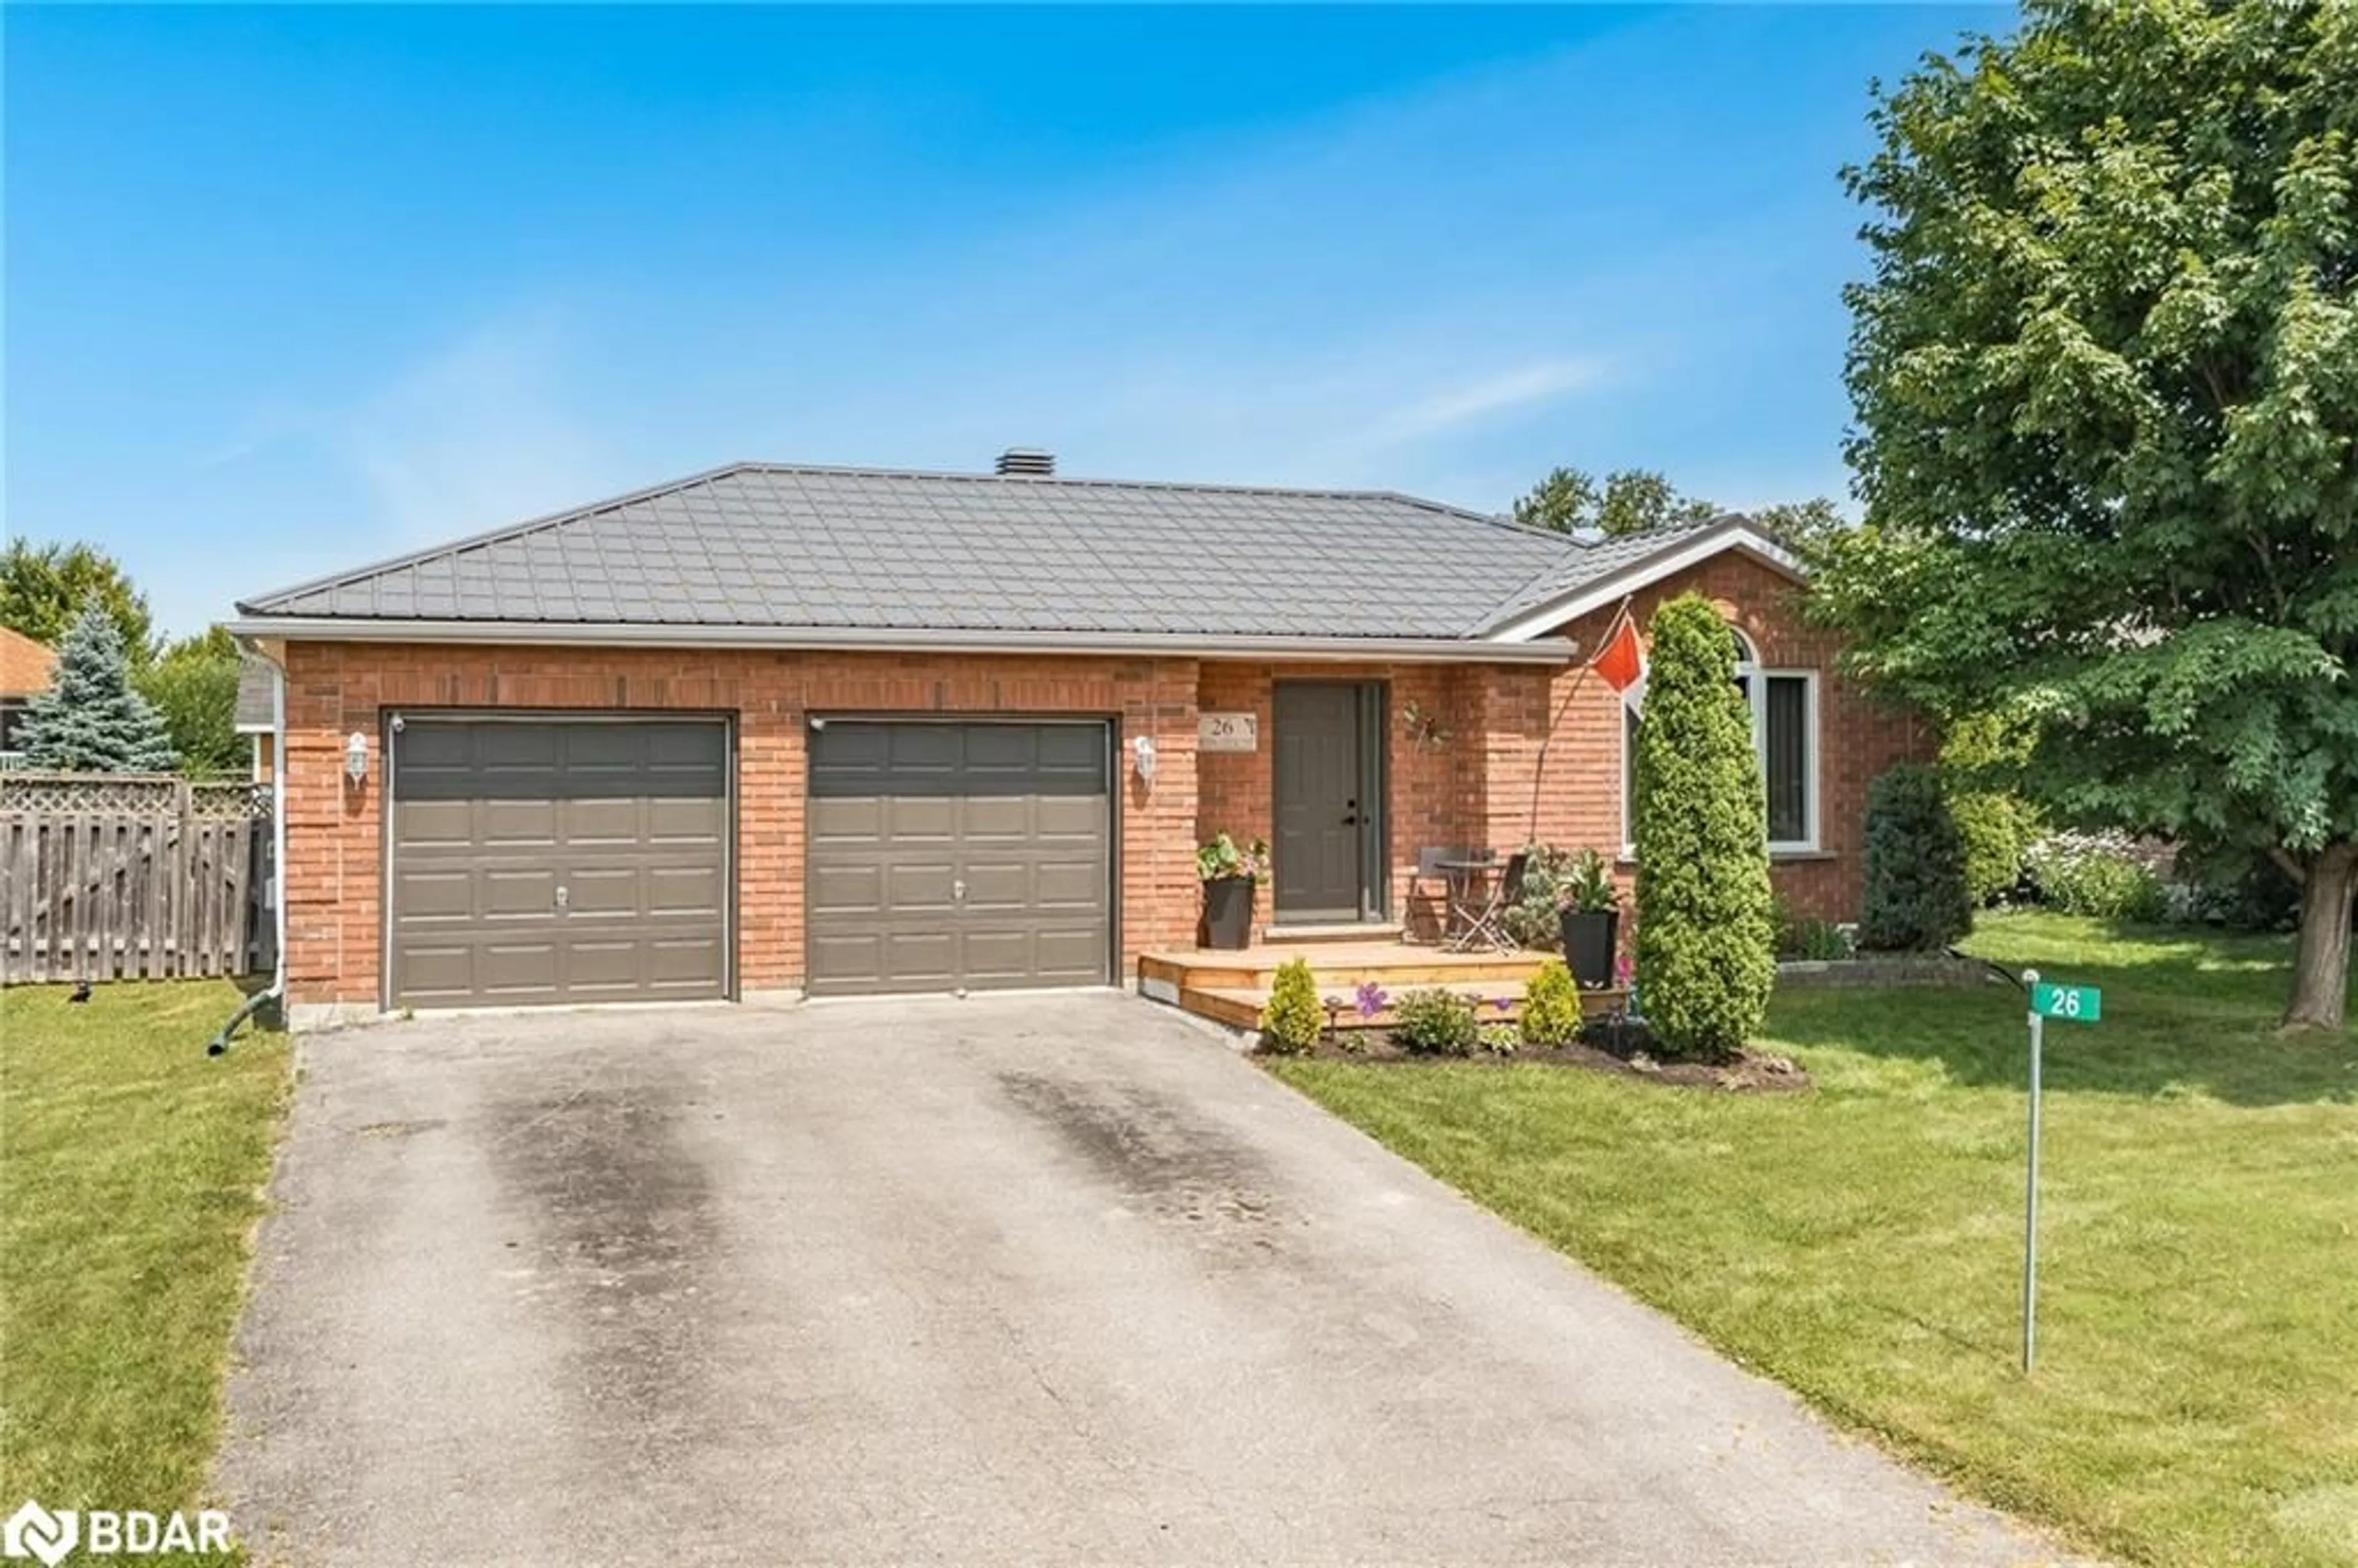 Home with brick exterior material for 26 Burton Cres, Elmvale Ontario L0L 1P0